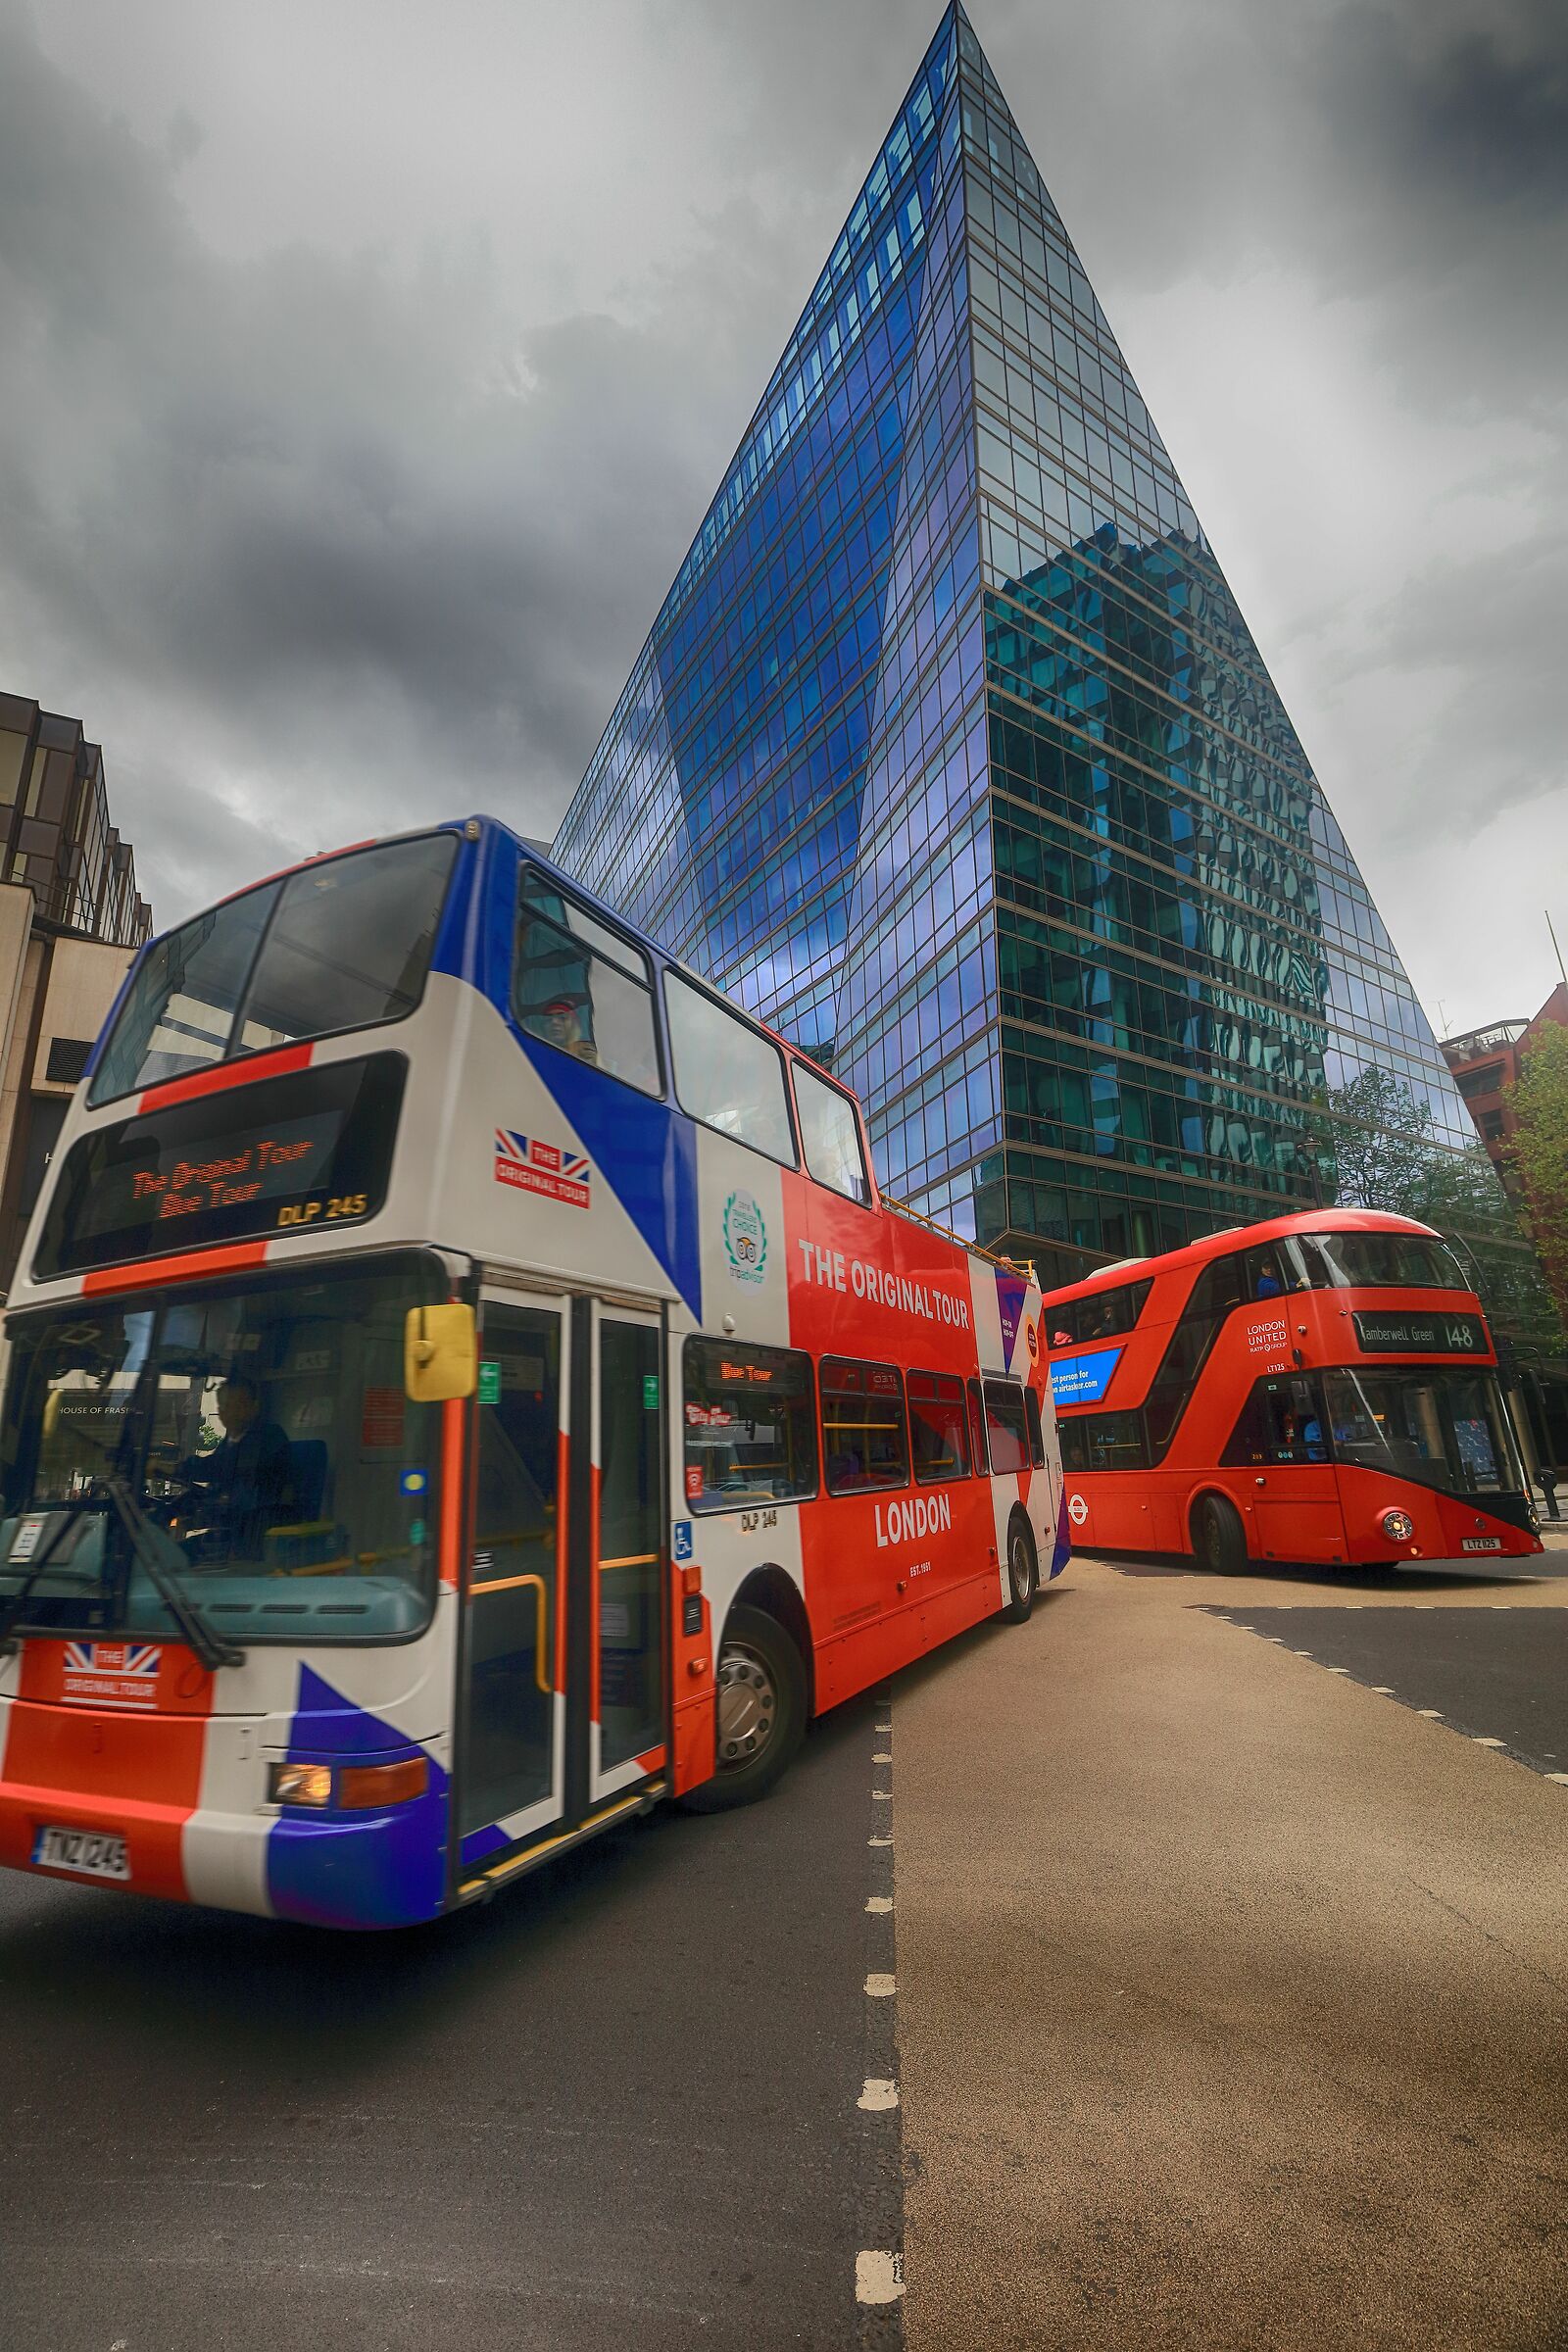 London buses...